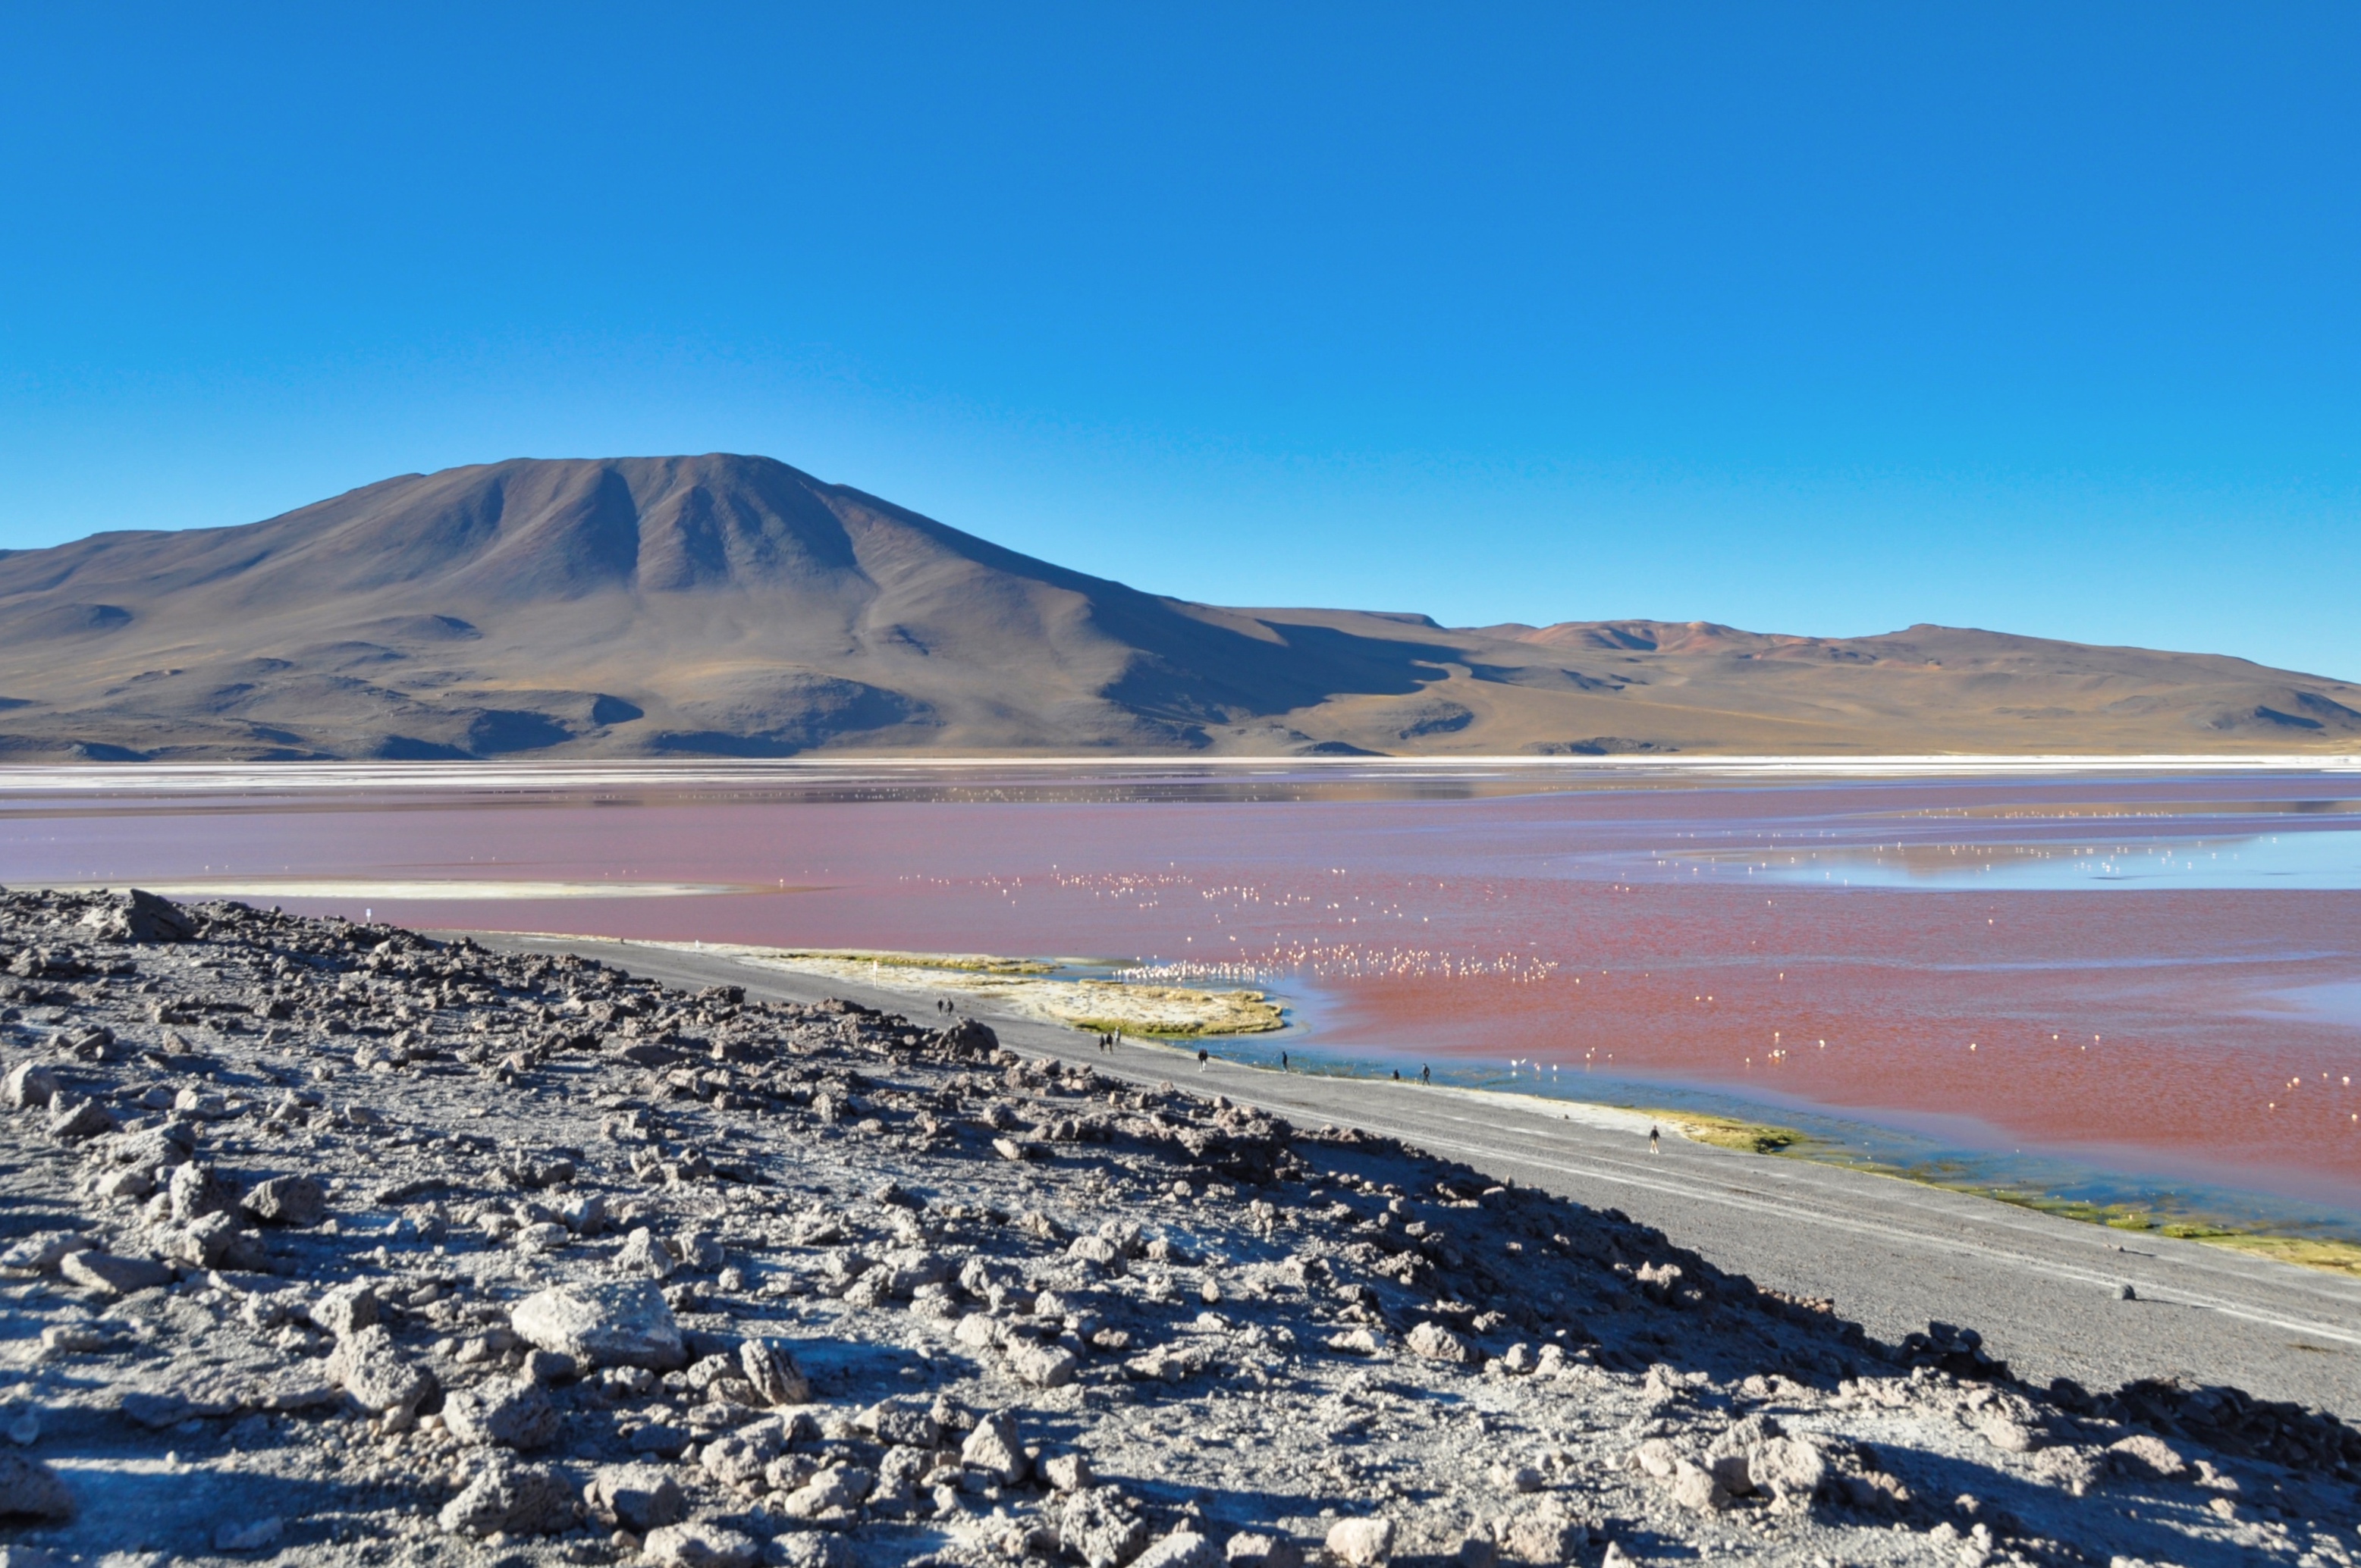 Two Travel The World - Uyuni Salt Flats tour from Tupiza, Bolivia